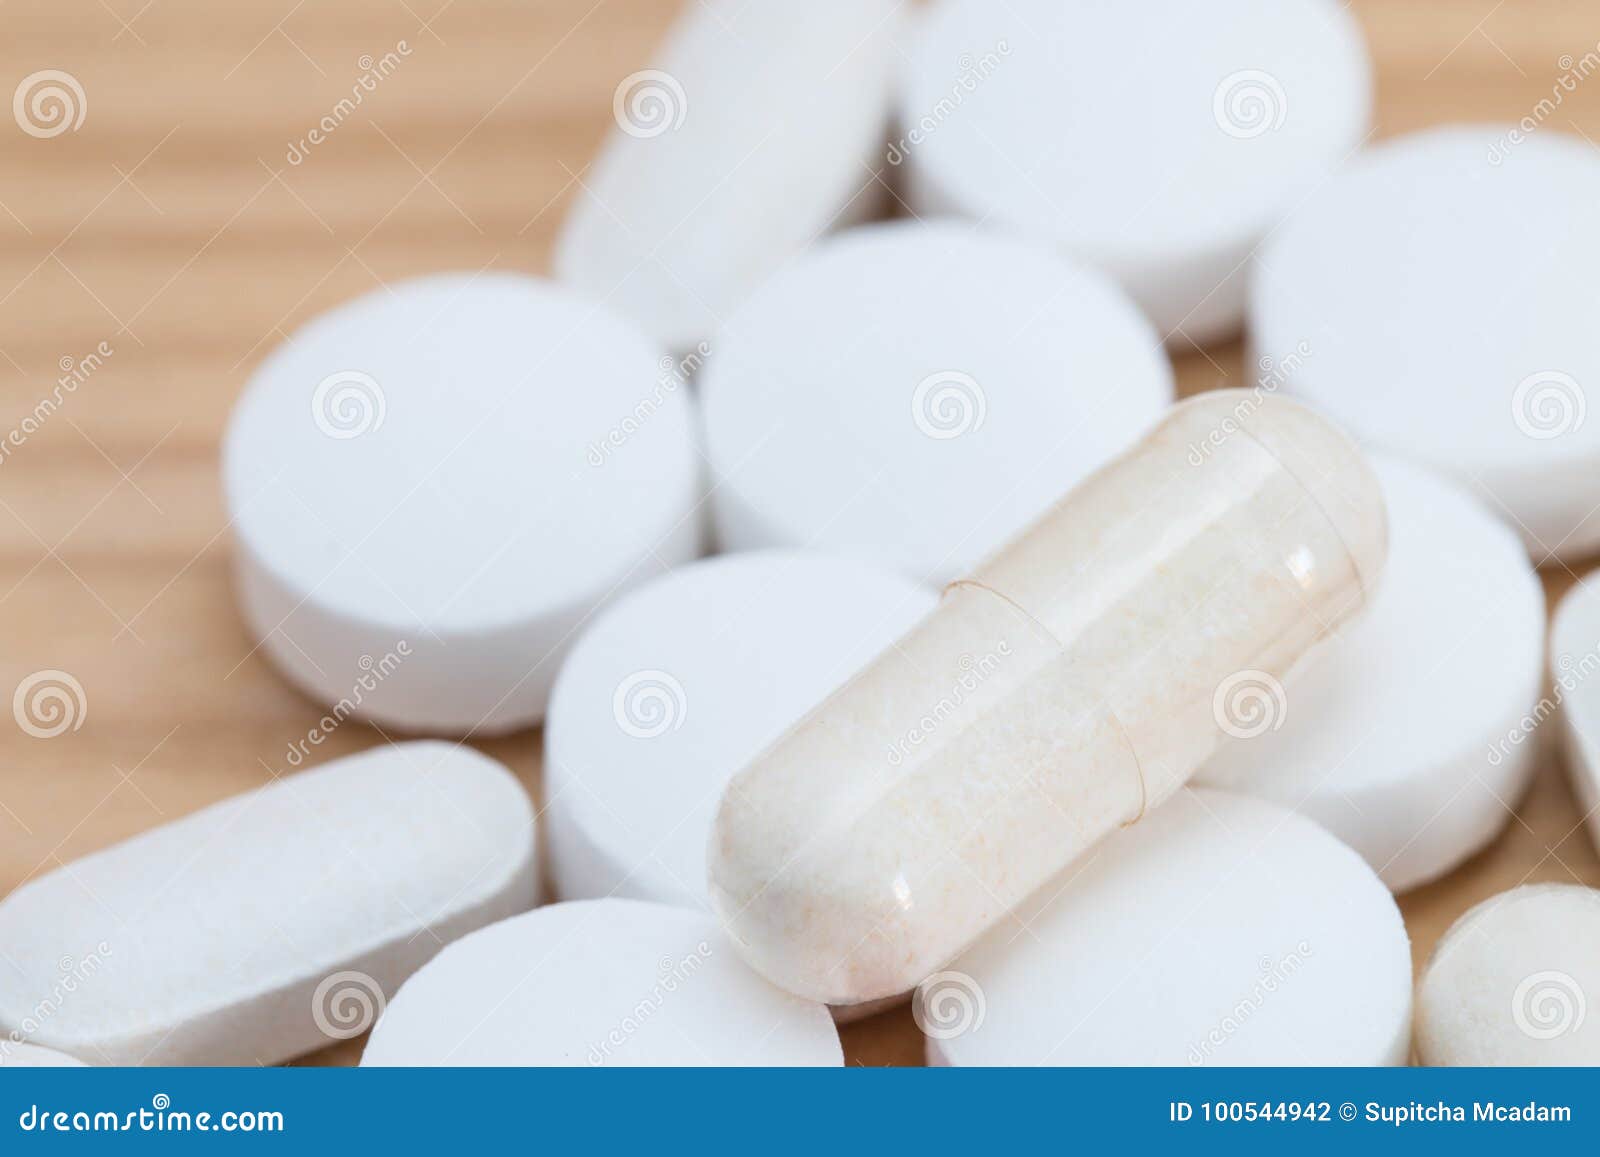 От белей препараты. Белые капсулы. Таблетки белая капсула о20. Таблетки белые NT 16. Таблетки белых капсулах БАД.